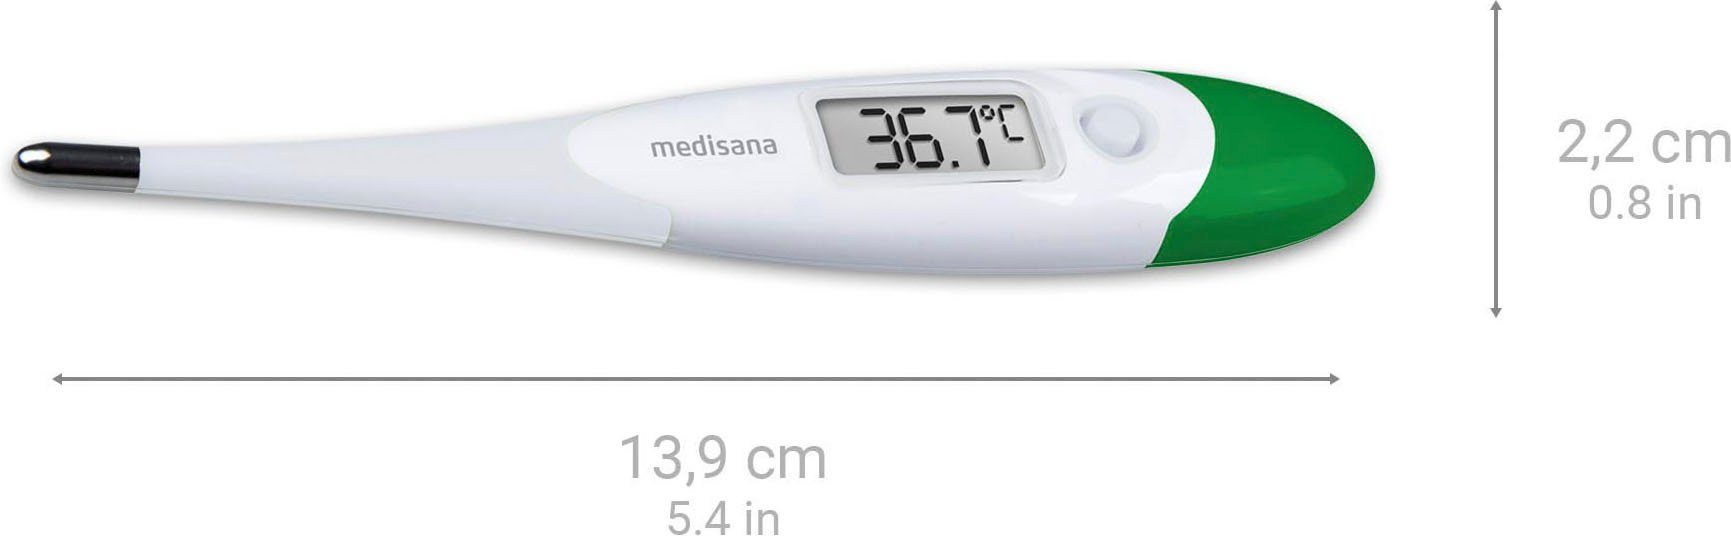 Fieberthermometer Medisana TM700